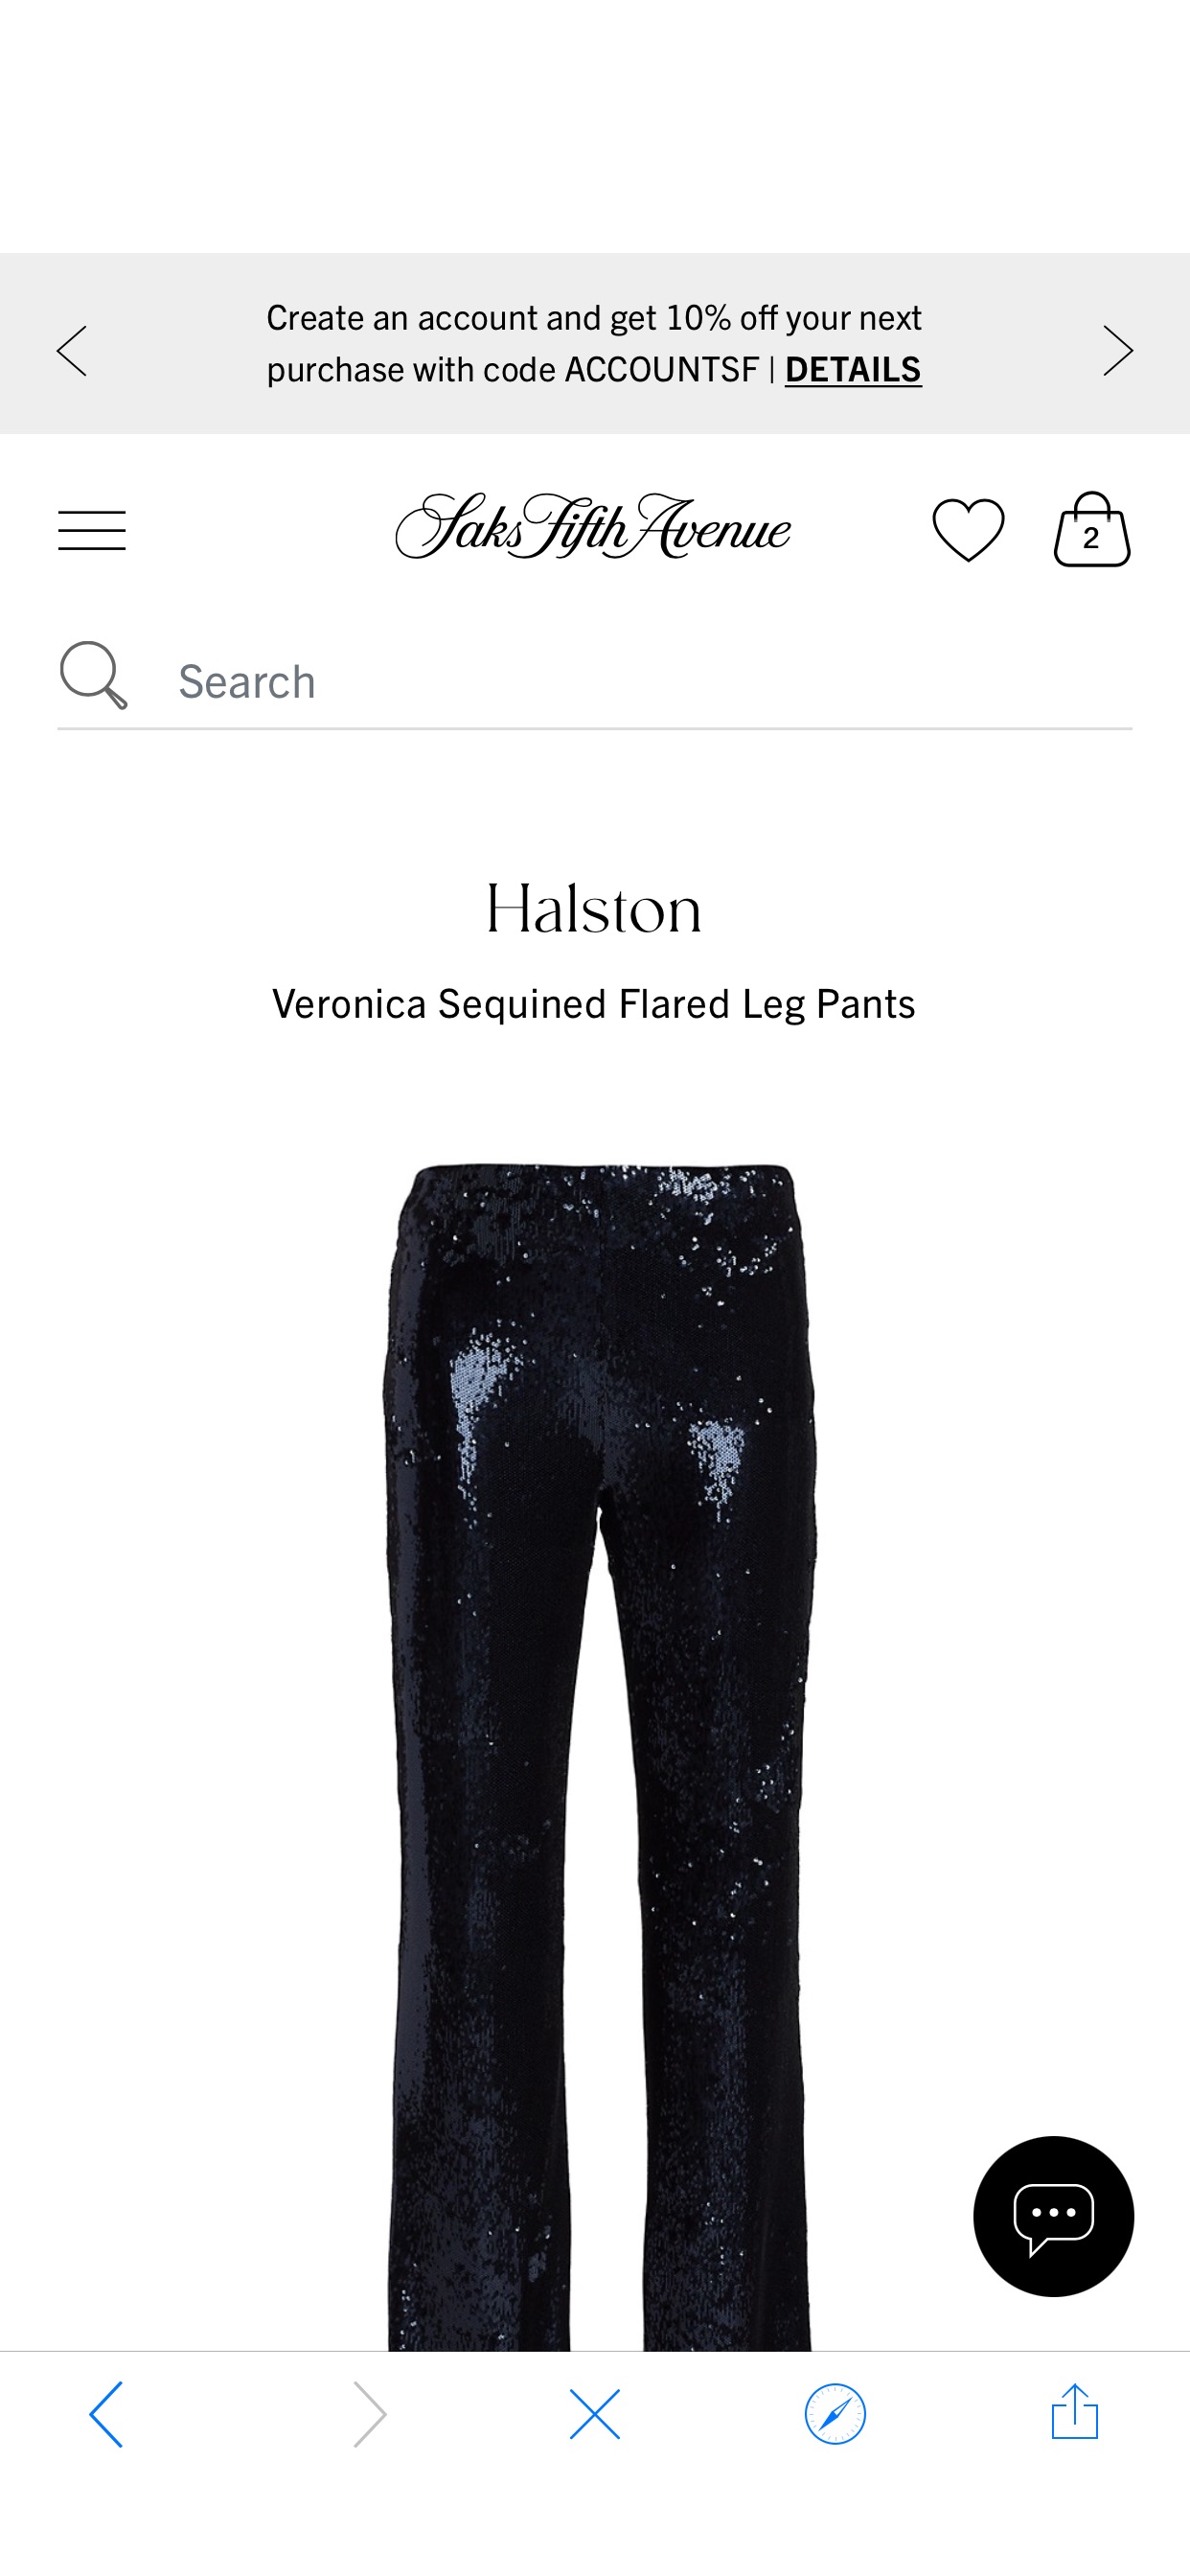 Shop Halston Veronica Sequined Flared Leg Pants | Saks Fifth Avenue
裤子